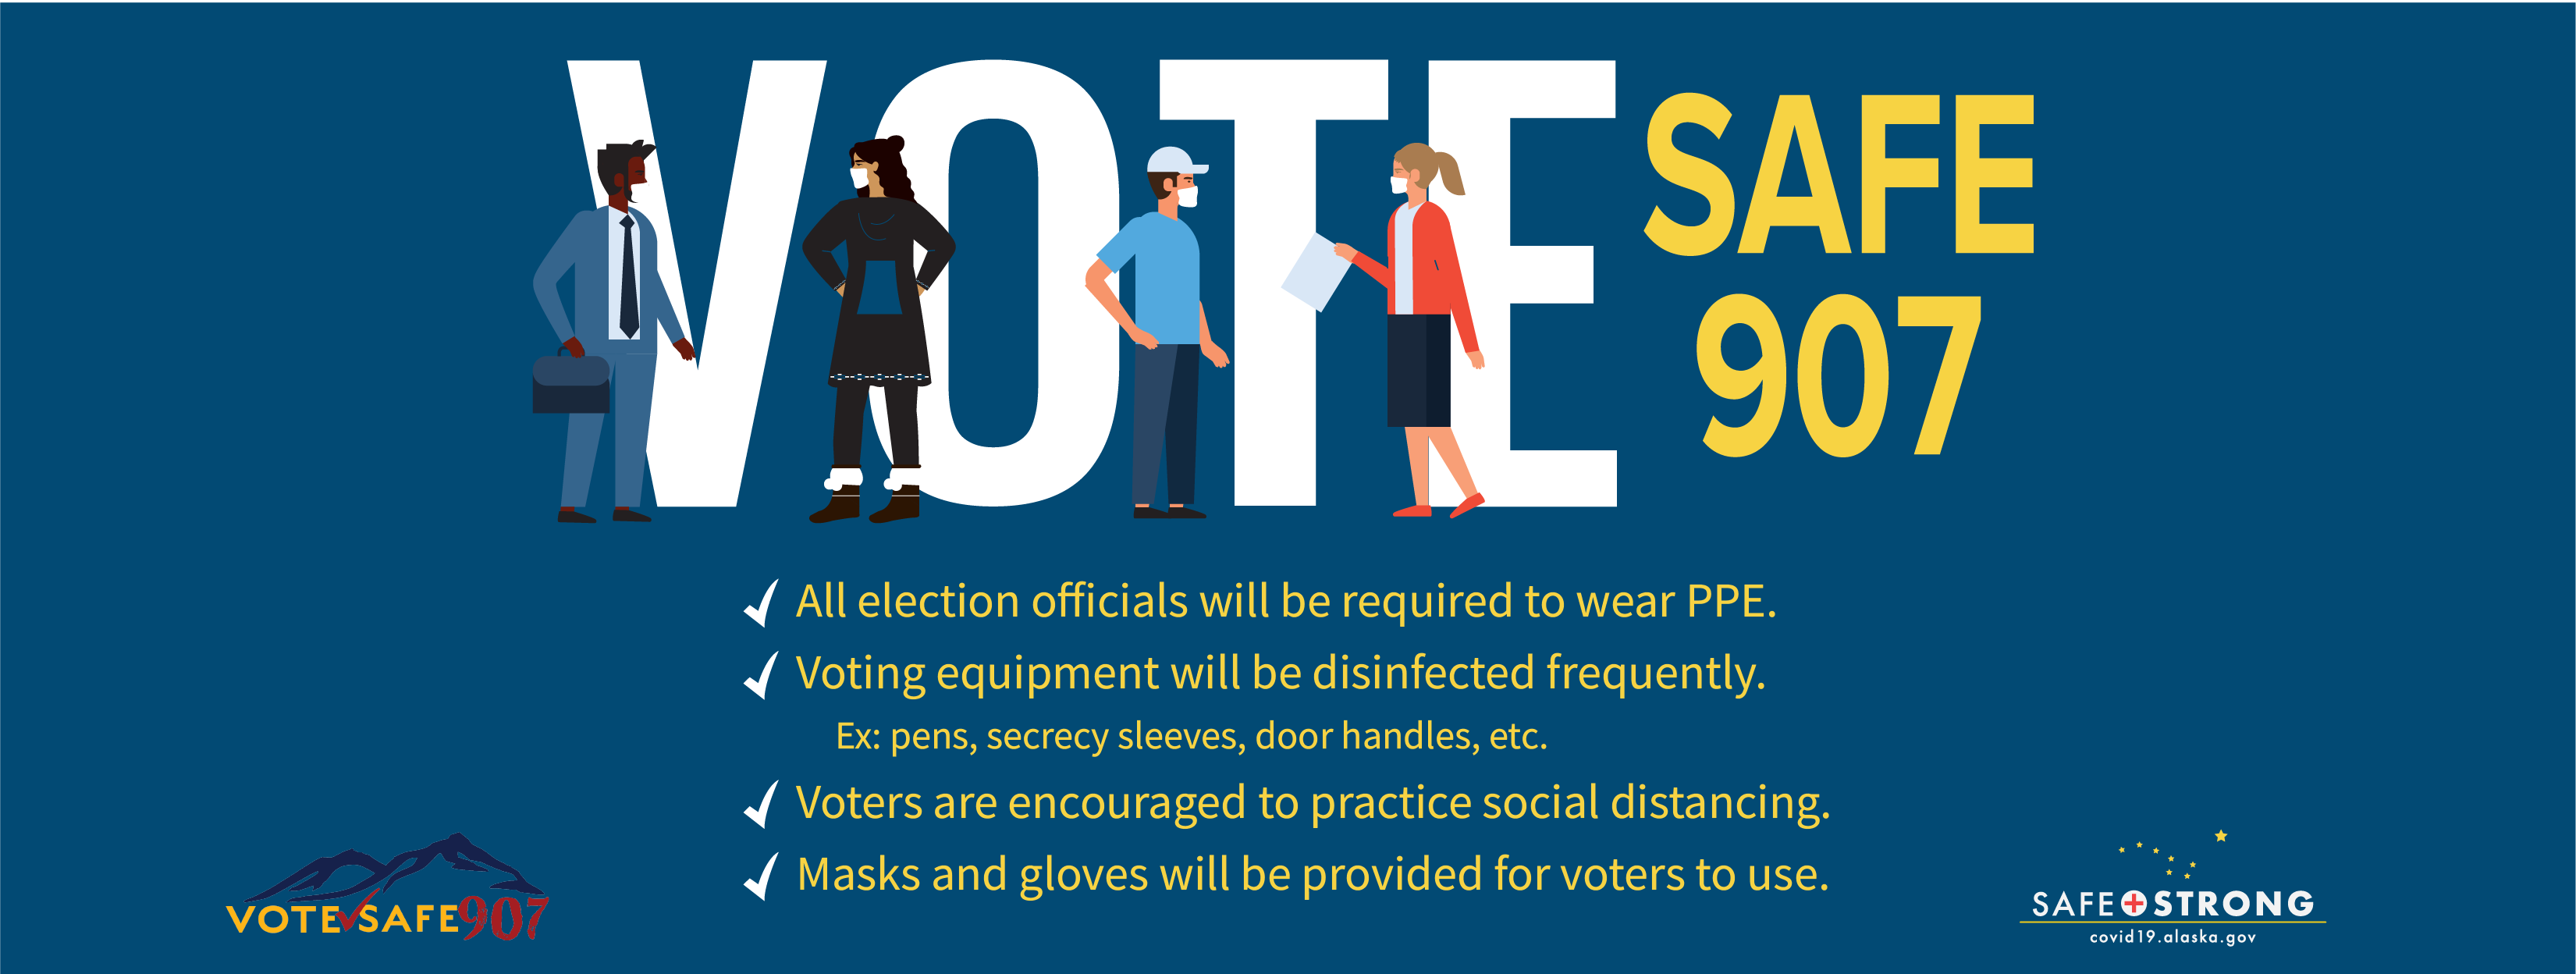 Vote Safe 907!